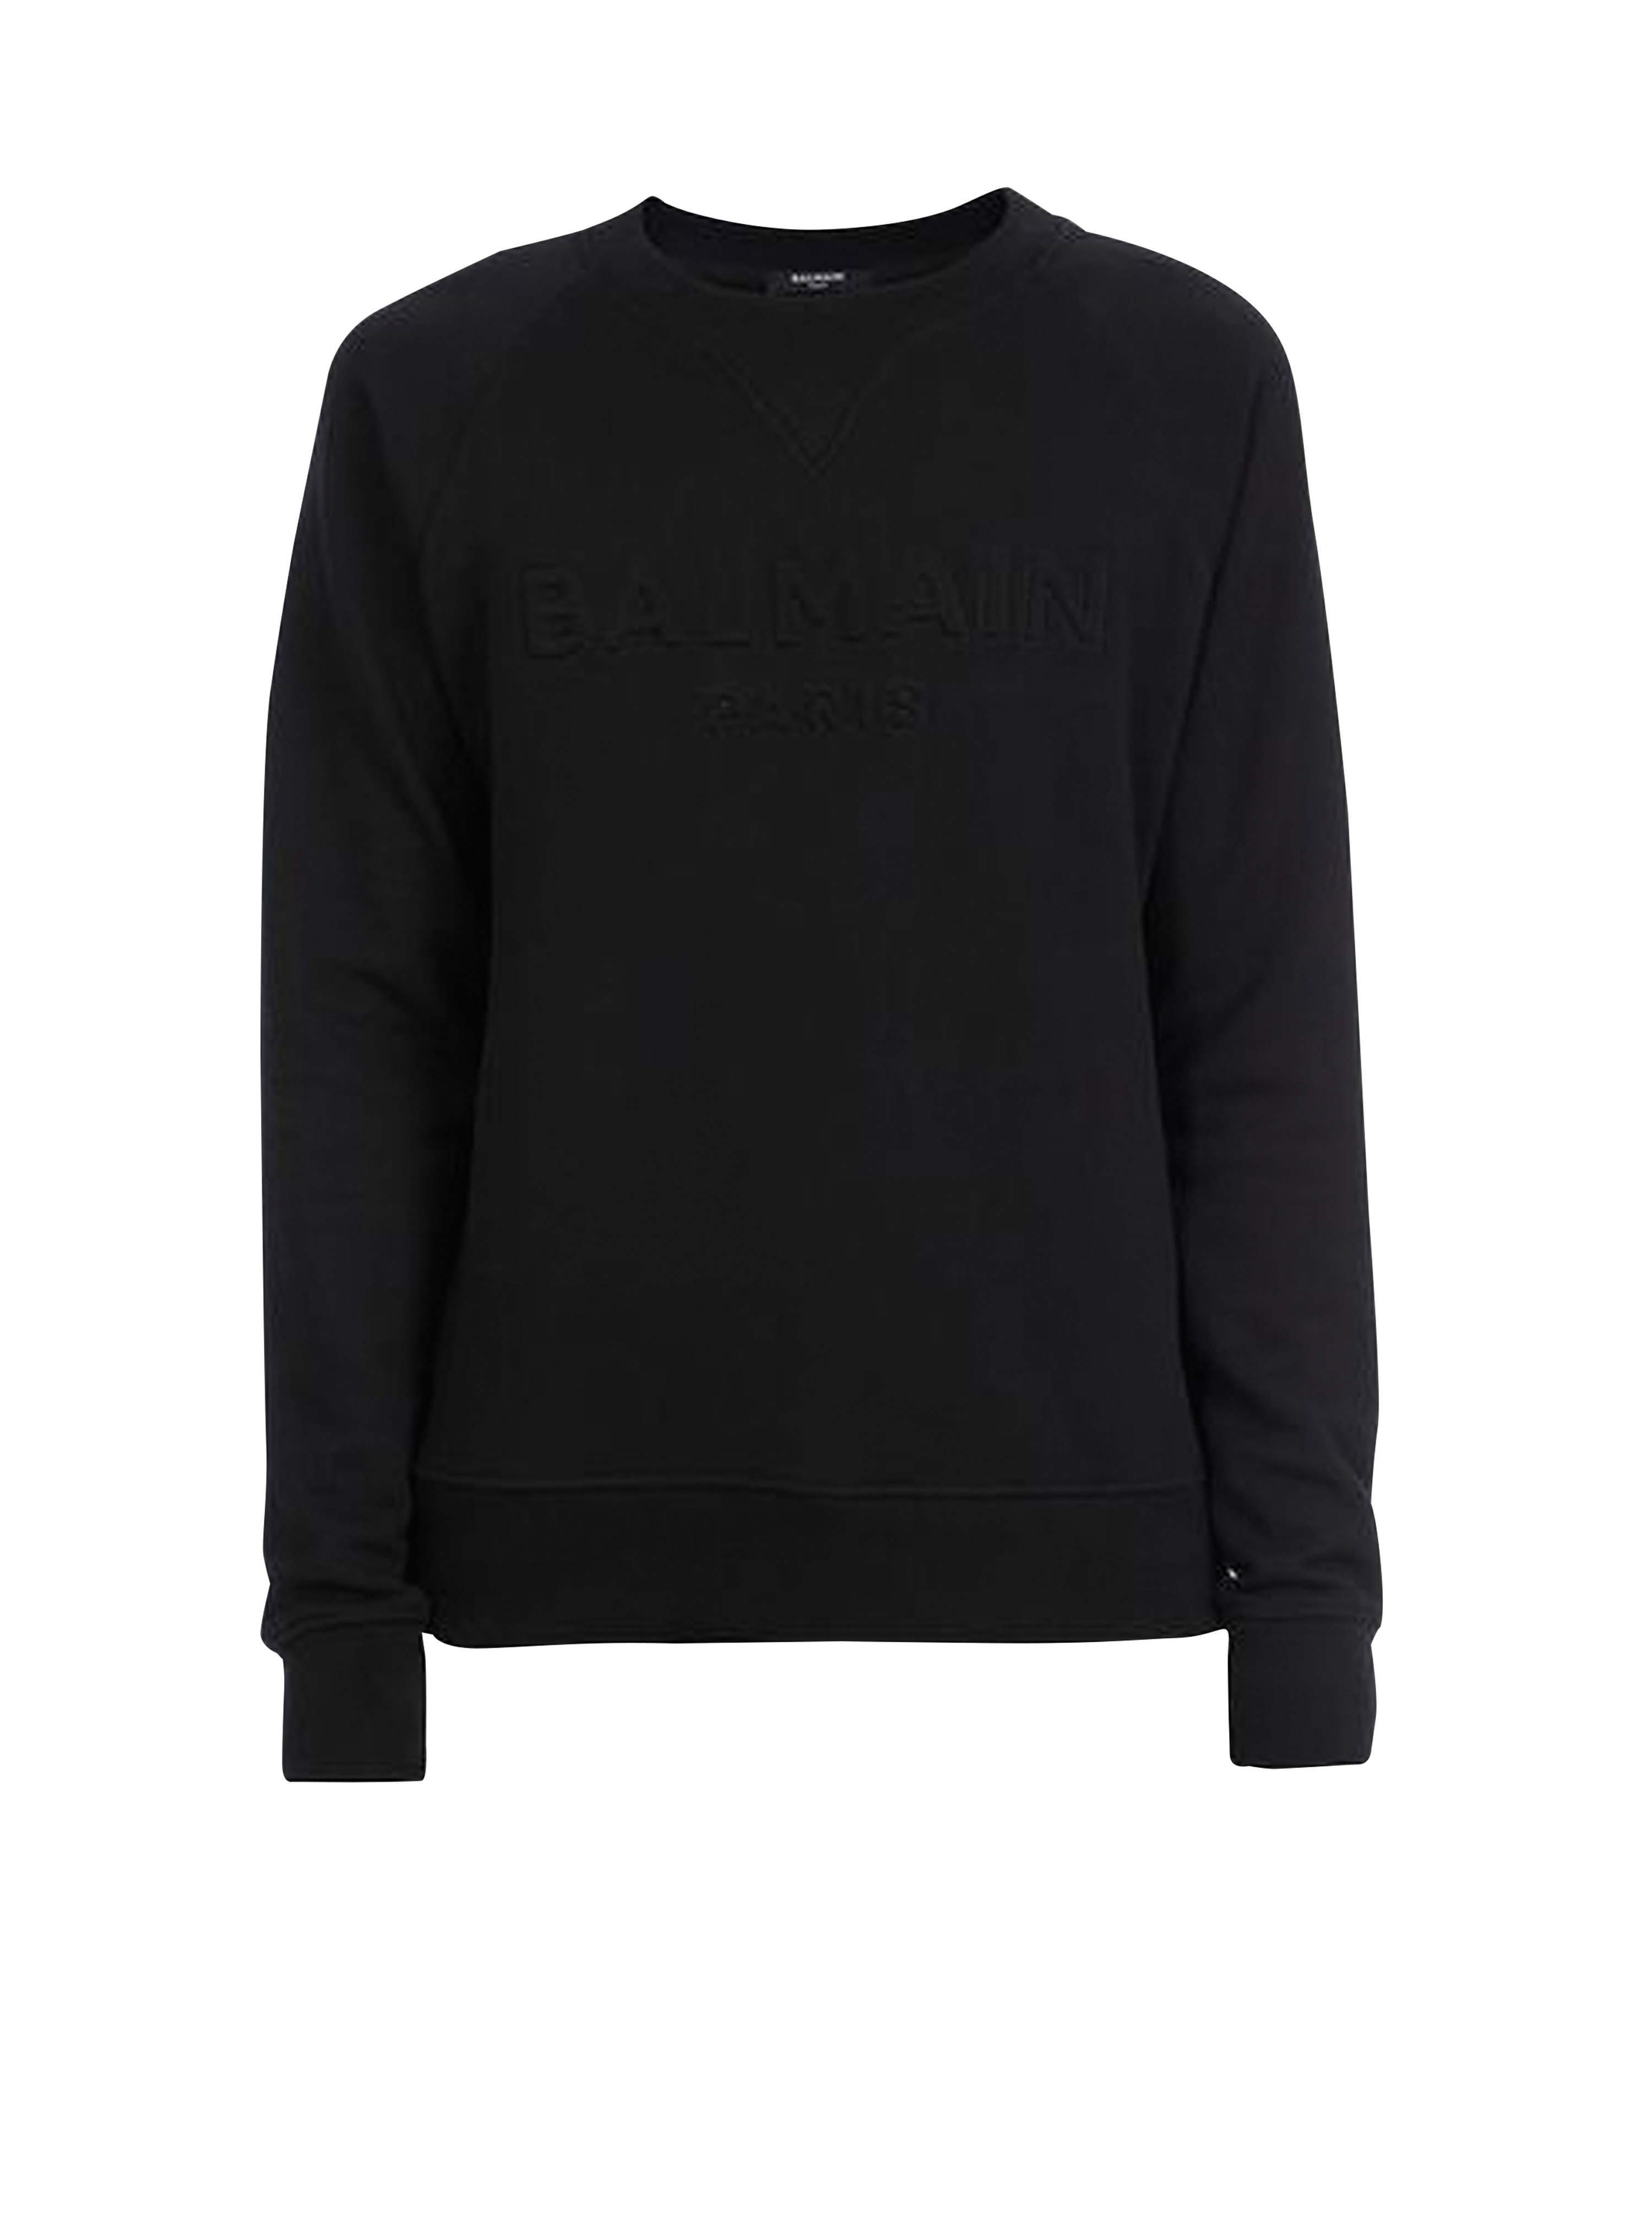 Cotton sweatshirt with embossed Balmain logo, black